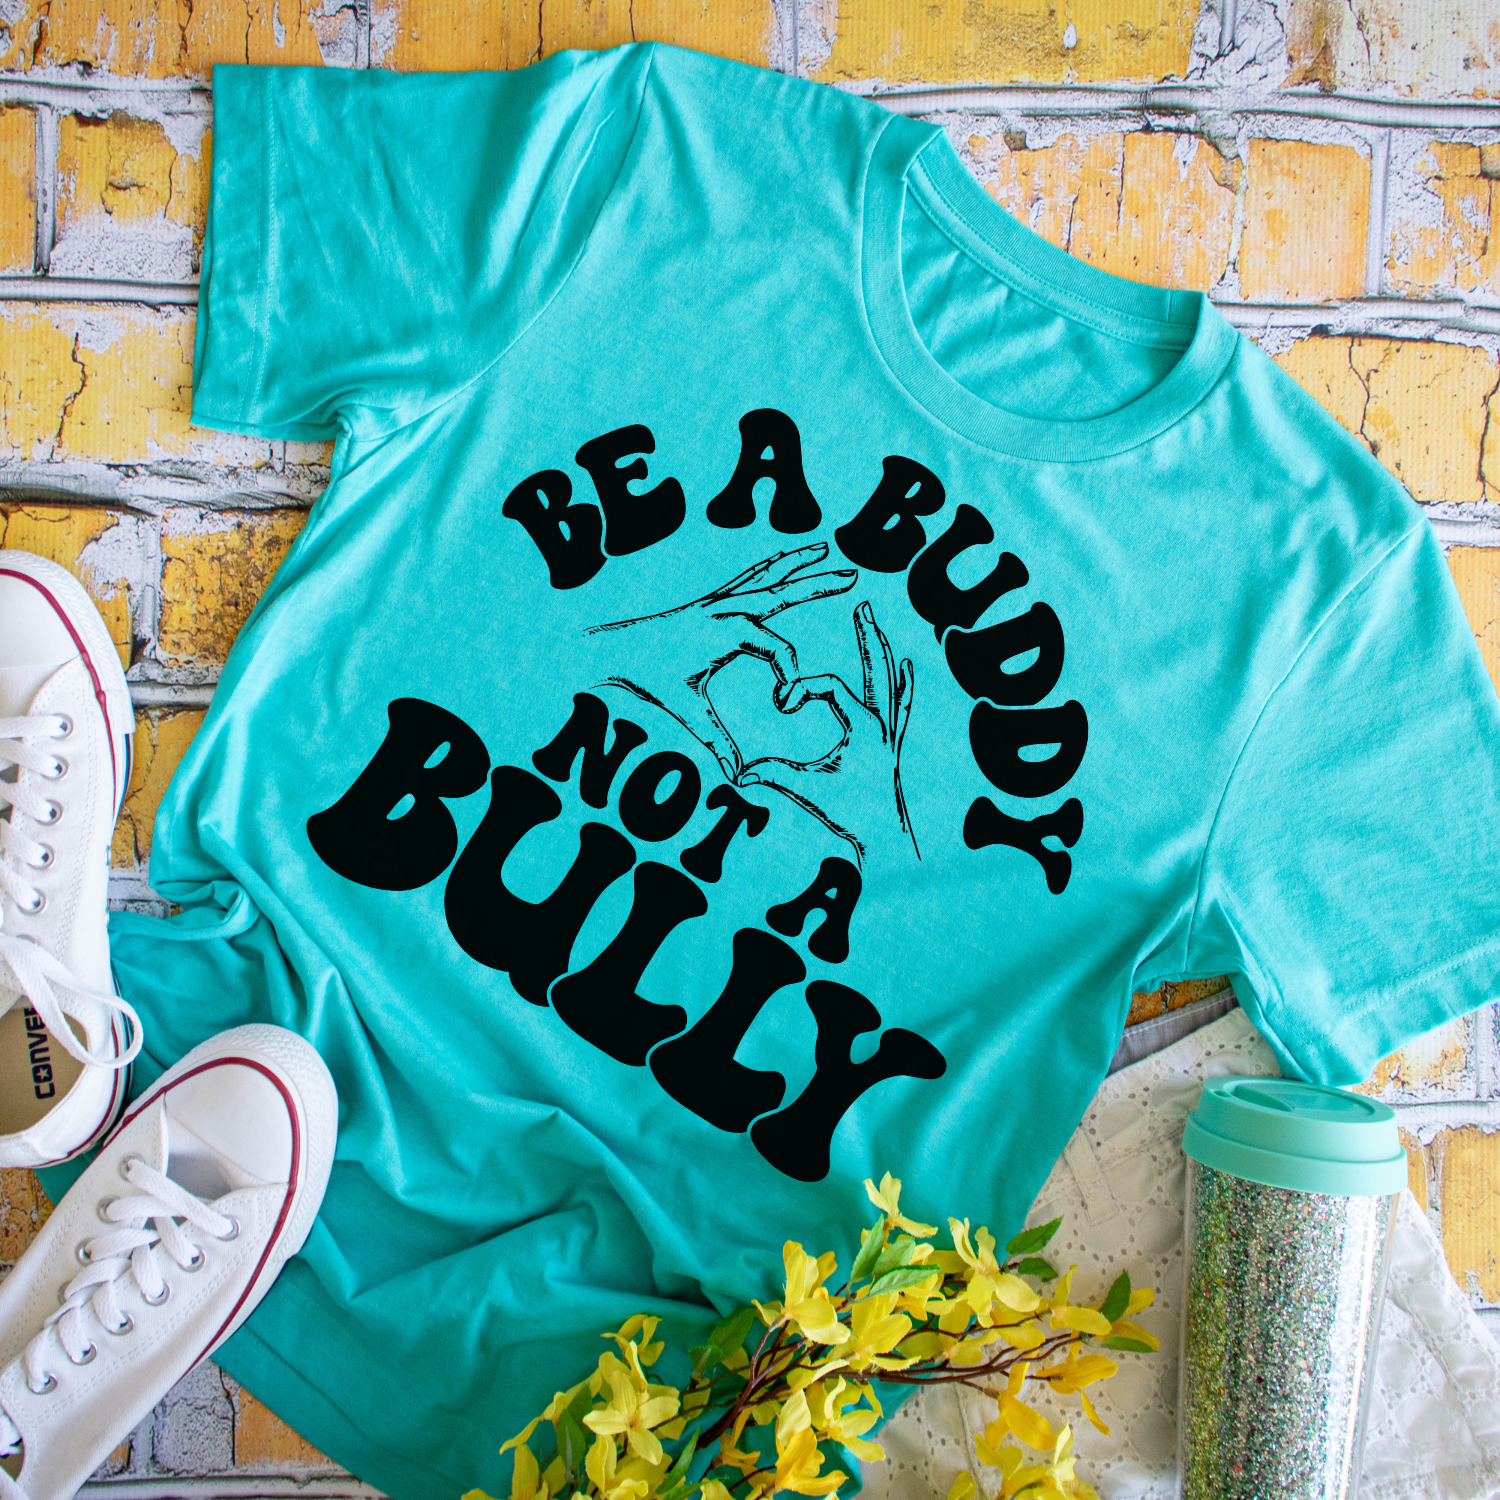 Be a Buddy Not a Bully Shirt